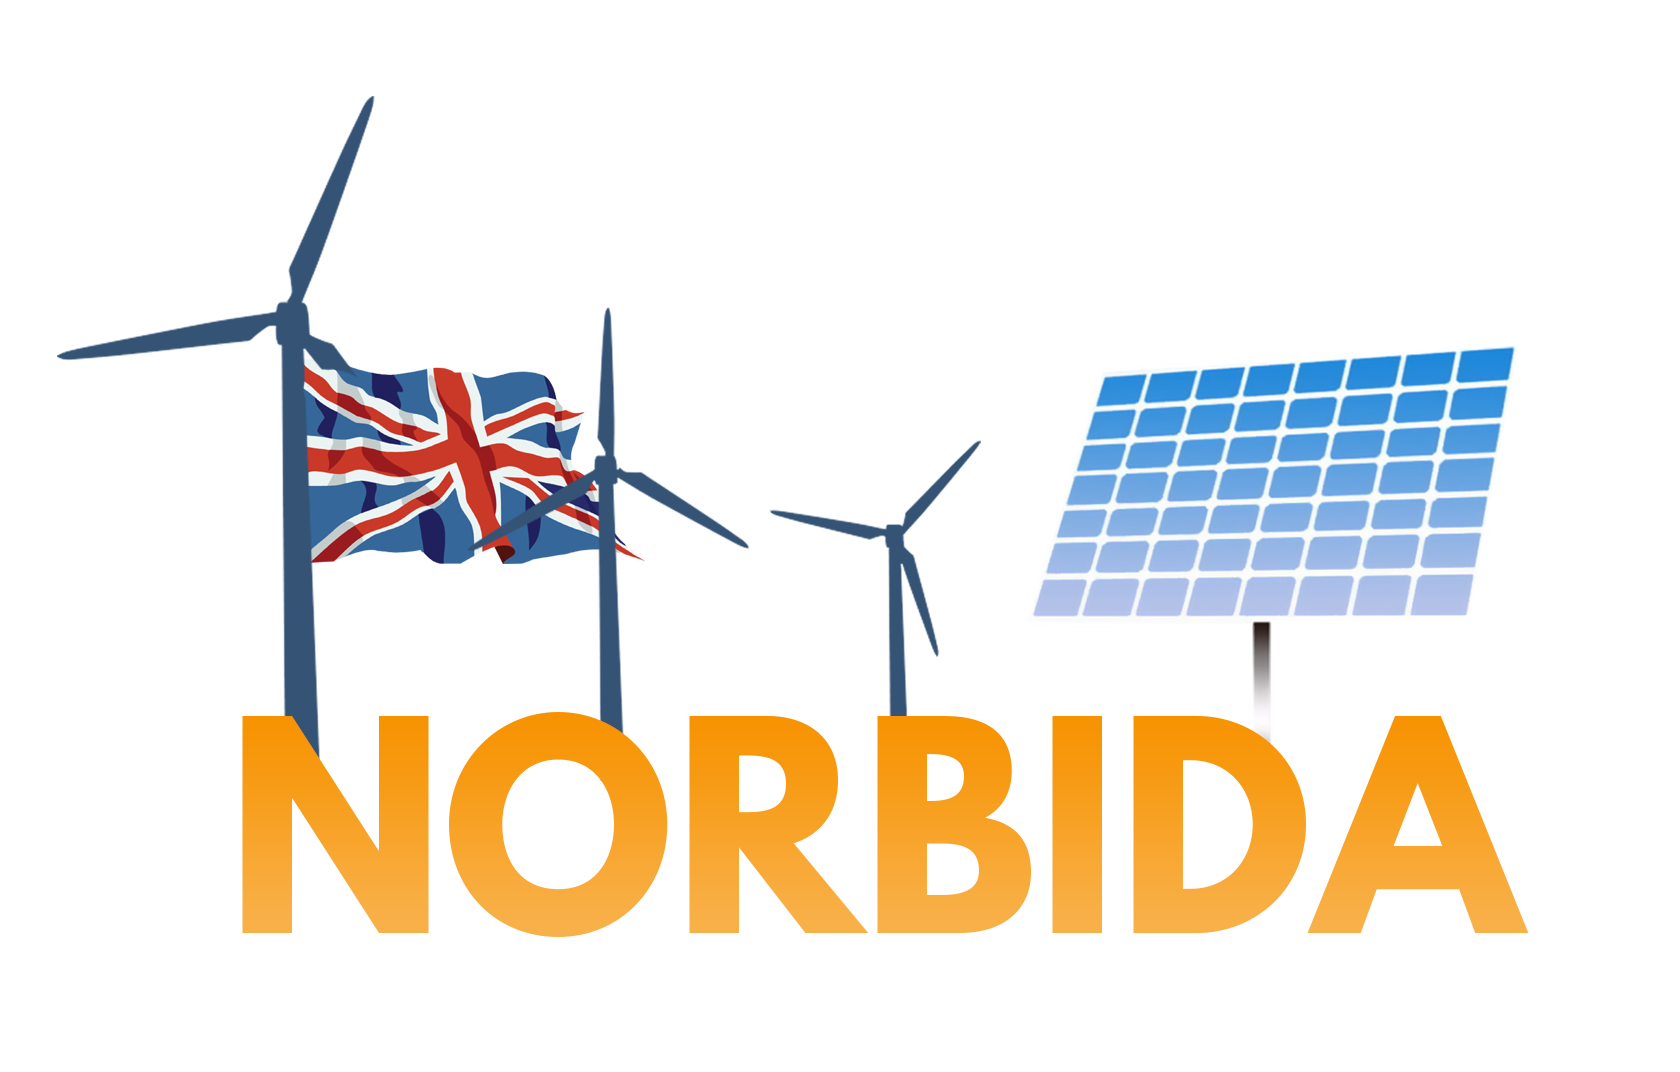 extend-uk-o-g-windfall-tax-changes-to-renewables-norbida-uk-ltd